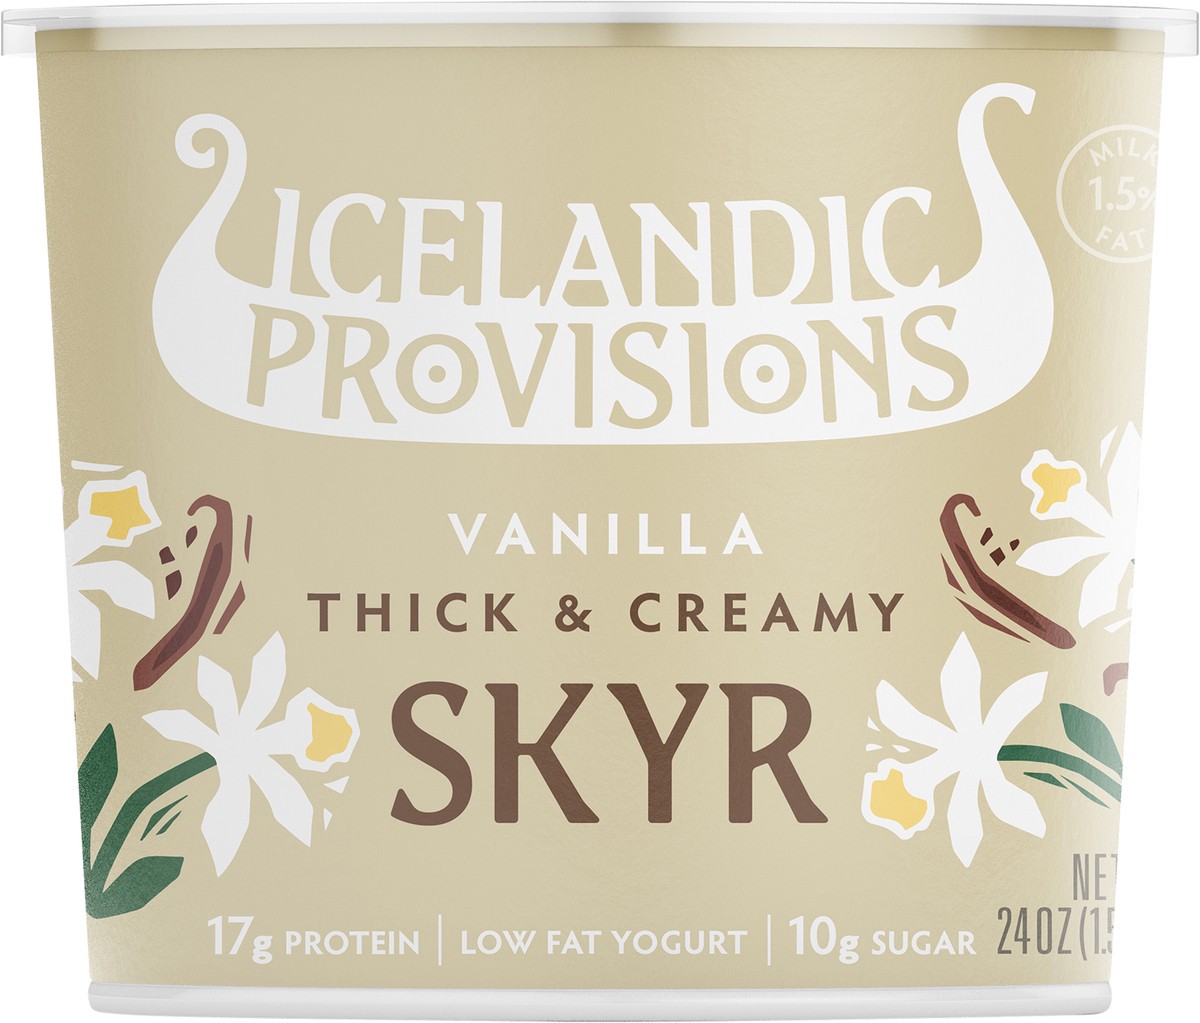 slide 6 of 7, Icelandic Provisions Vanilla Thick & Creamy Low Fat Skyr 24 oz, 24 oz